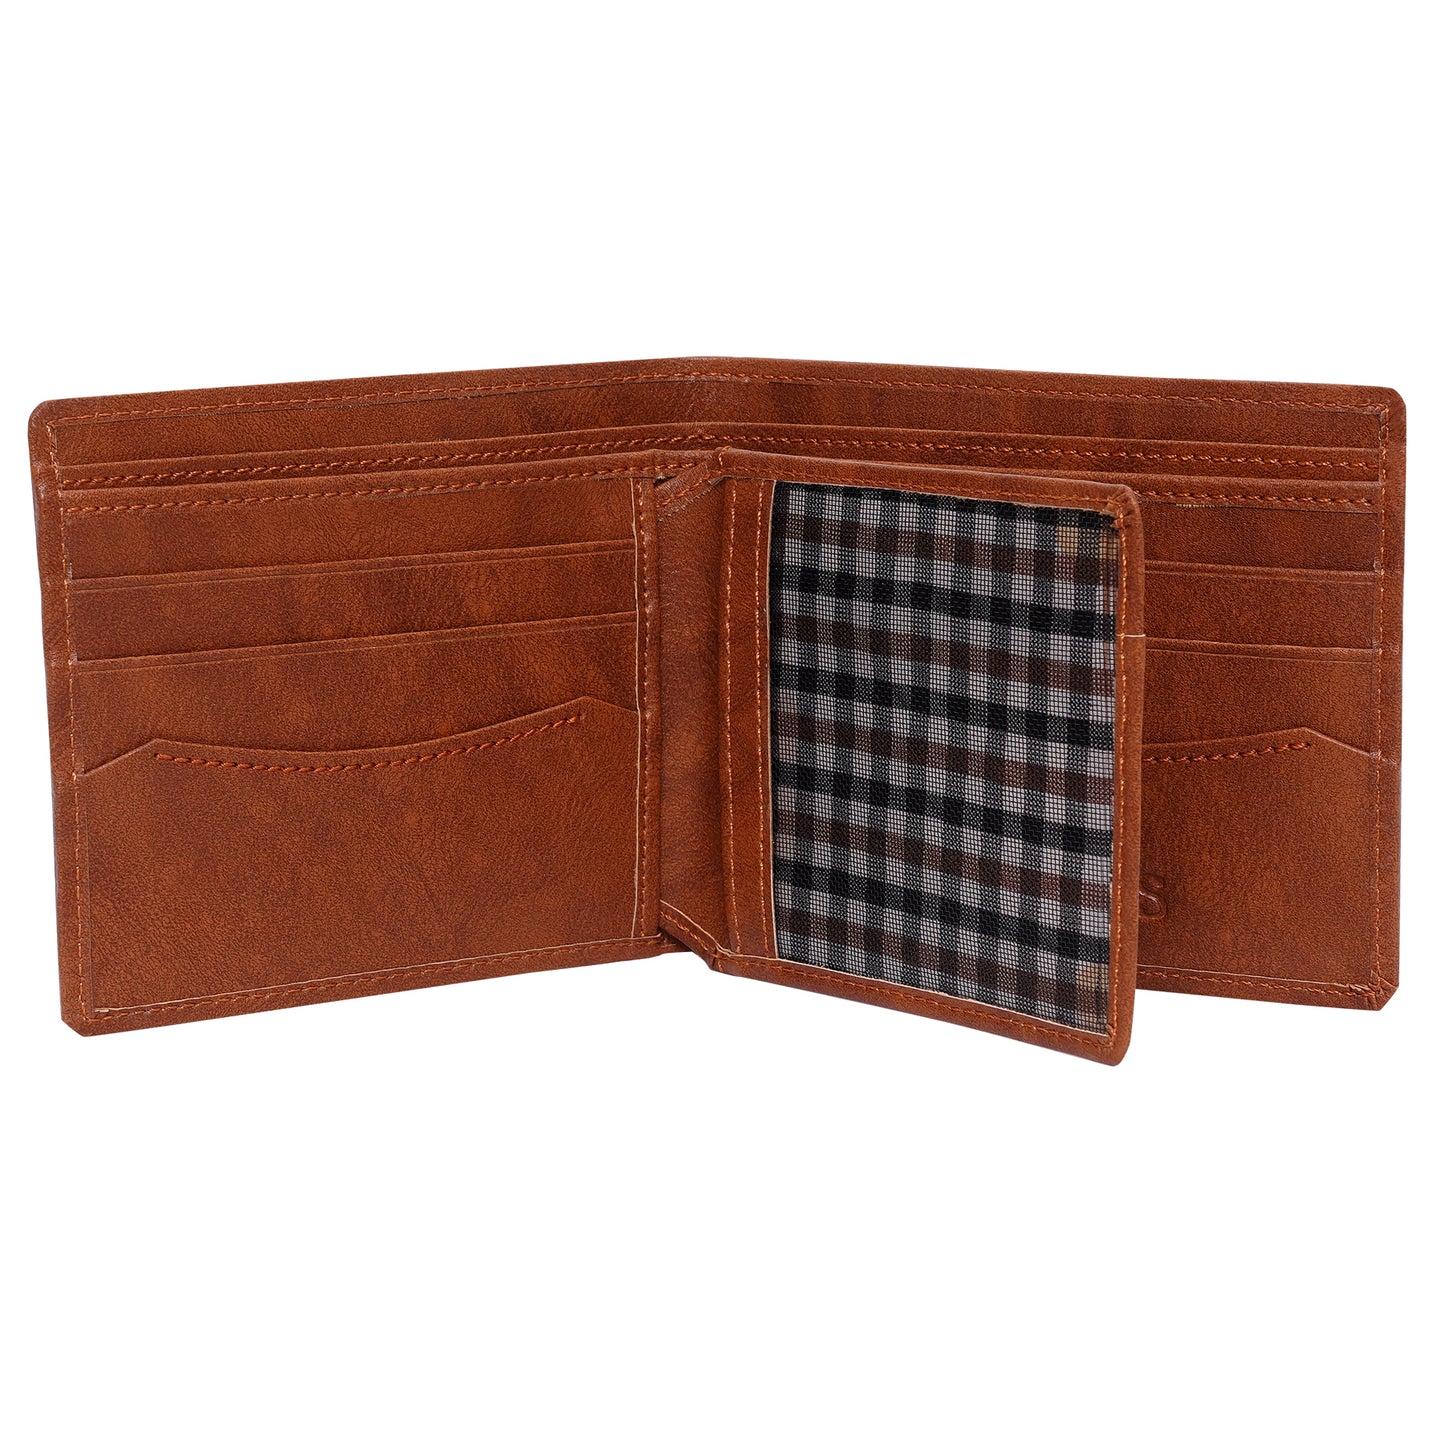 Makas men's wallet , internal look 3,color - Tan